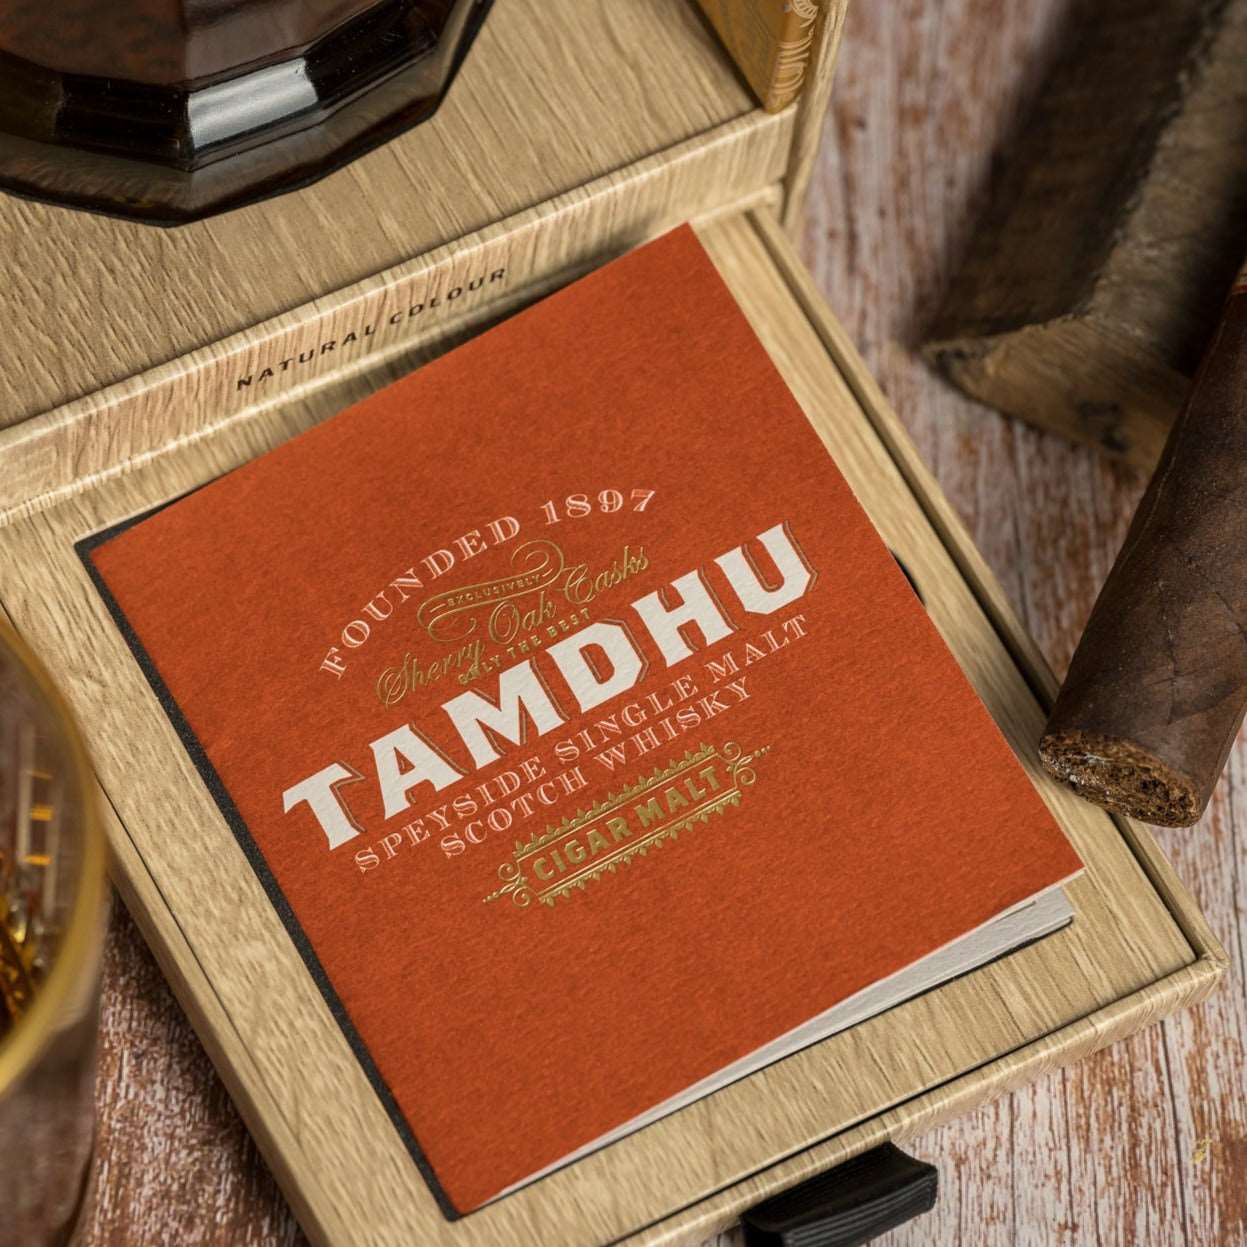 Tamdhu | Cigar Malt | Batch 1 | 0,7l | 53,8%GET A BOTTLE